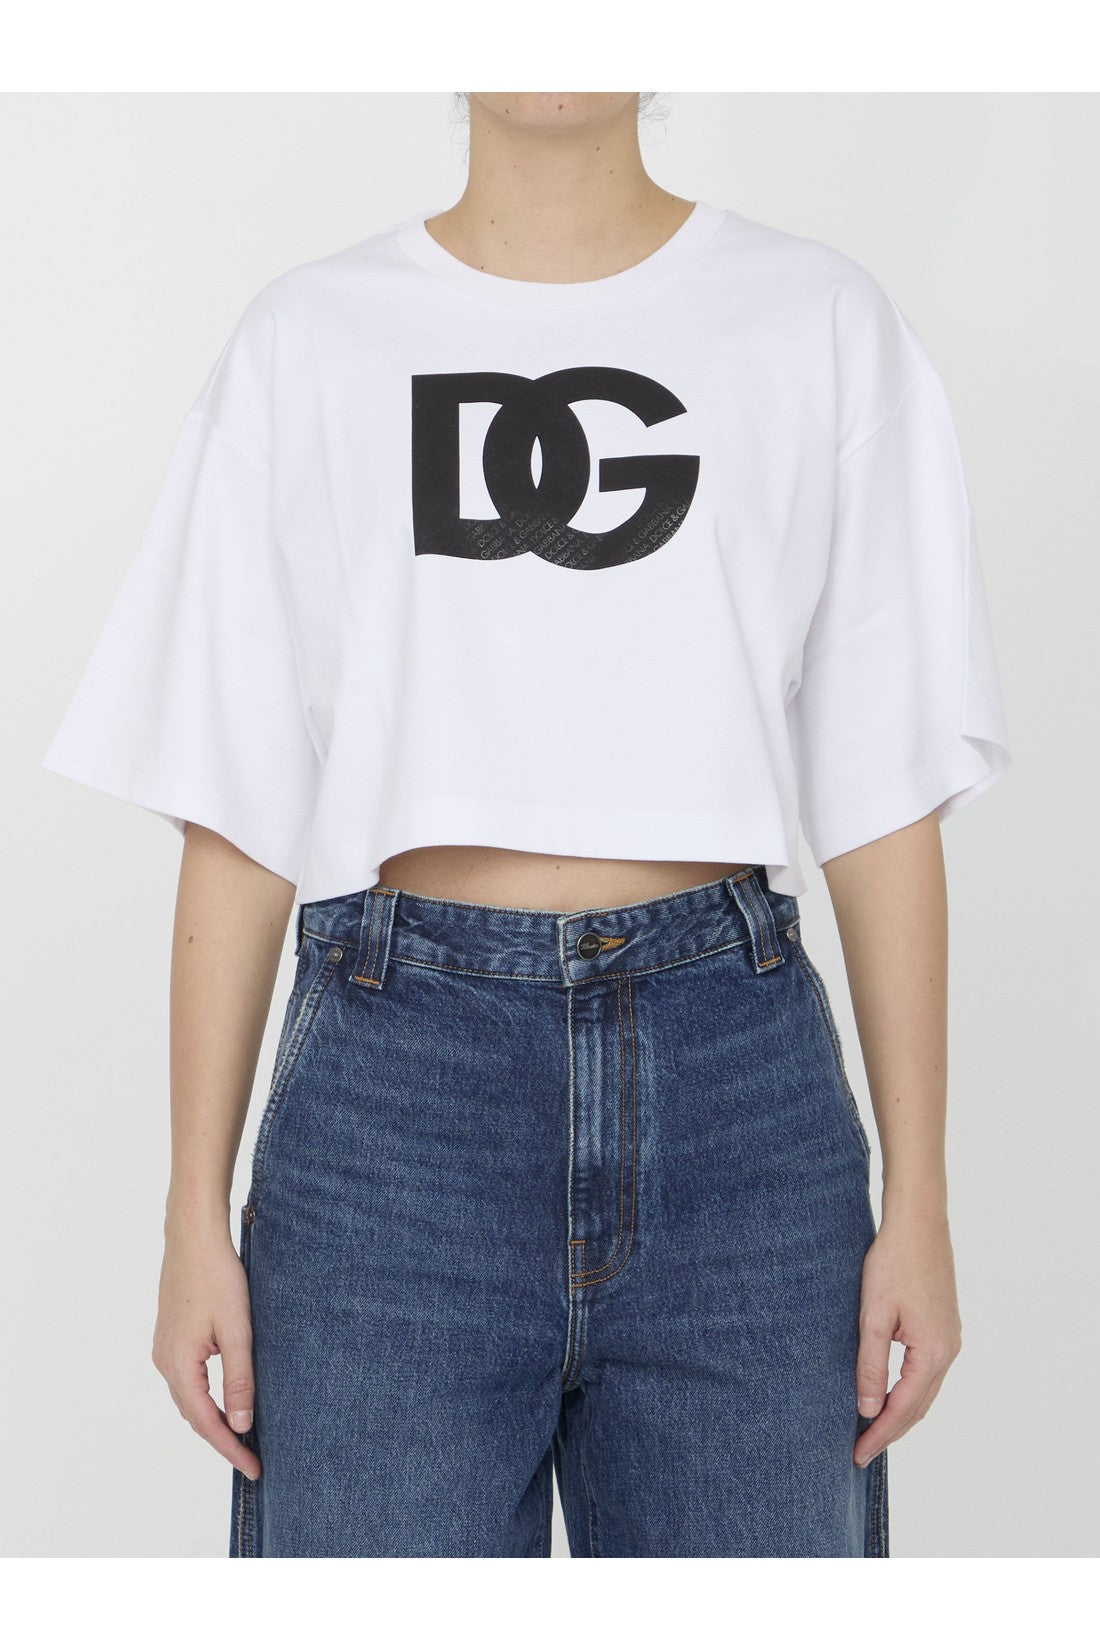 T-shirt with DG logo